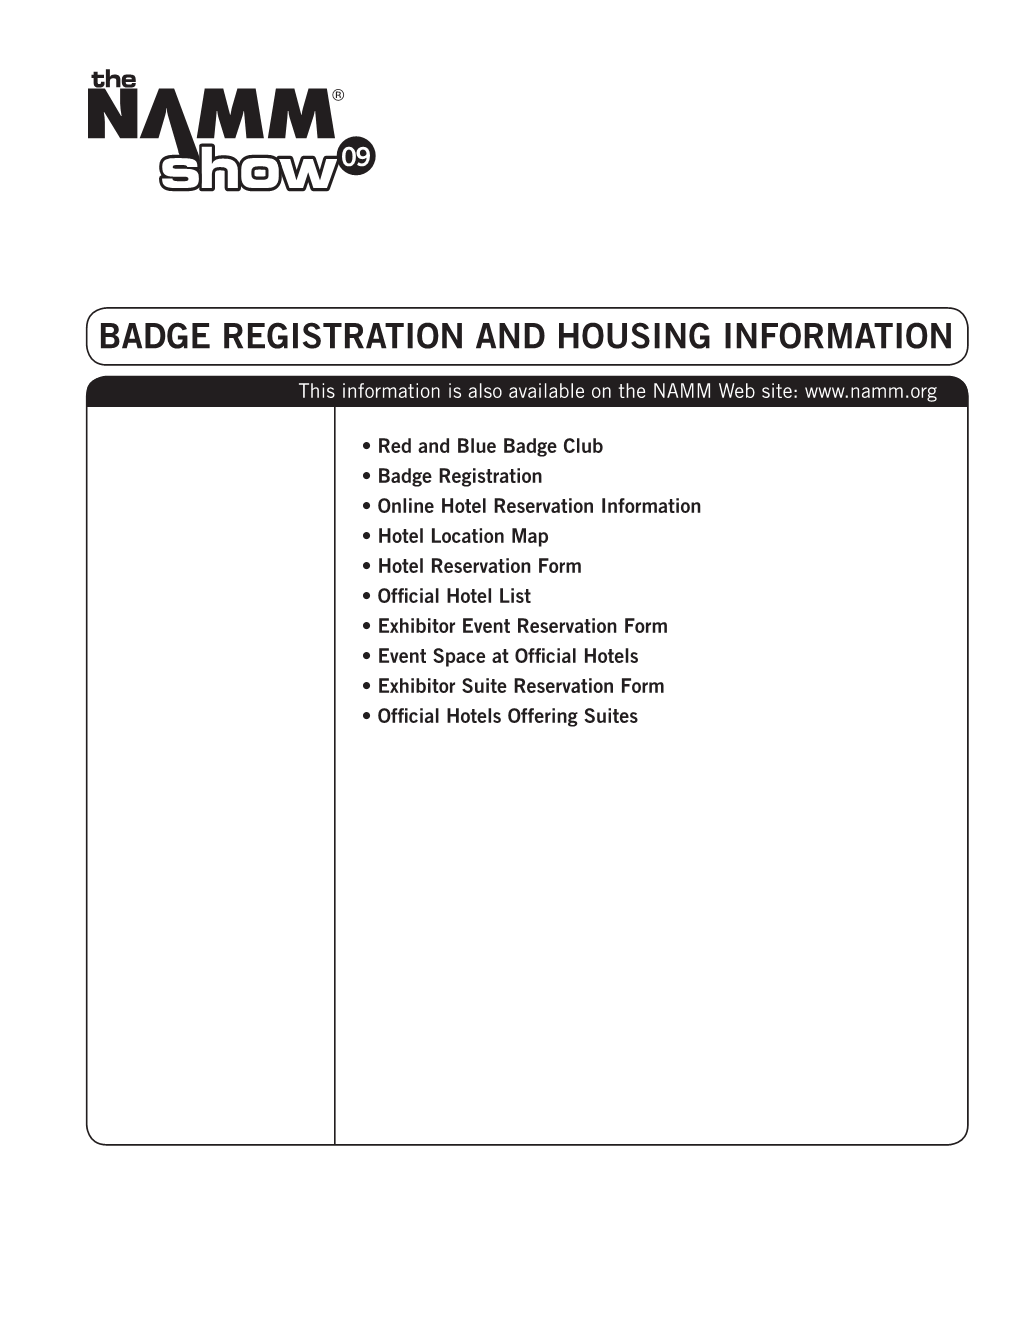 Badge Registration and Housing Information